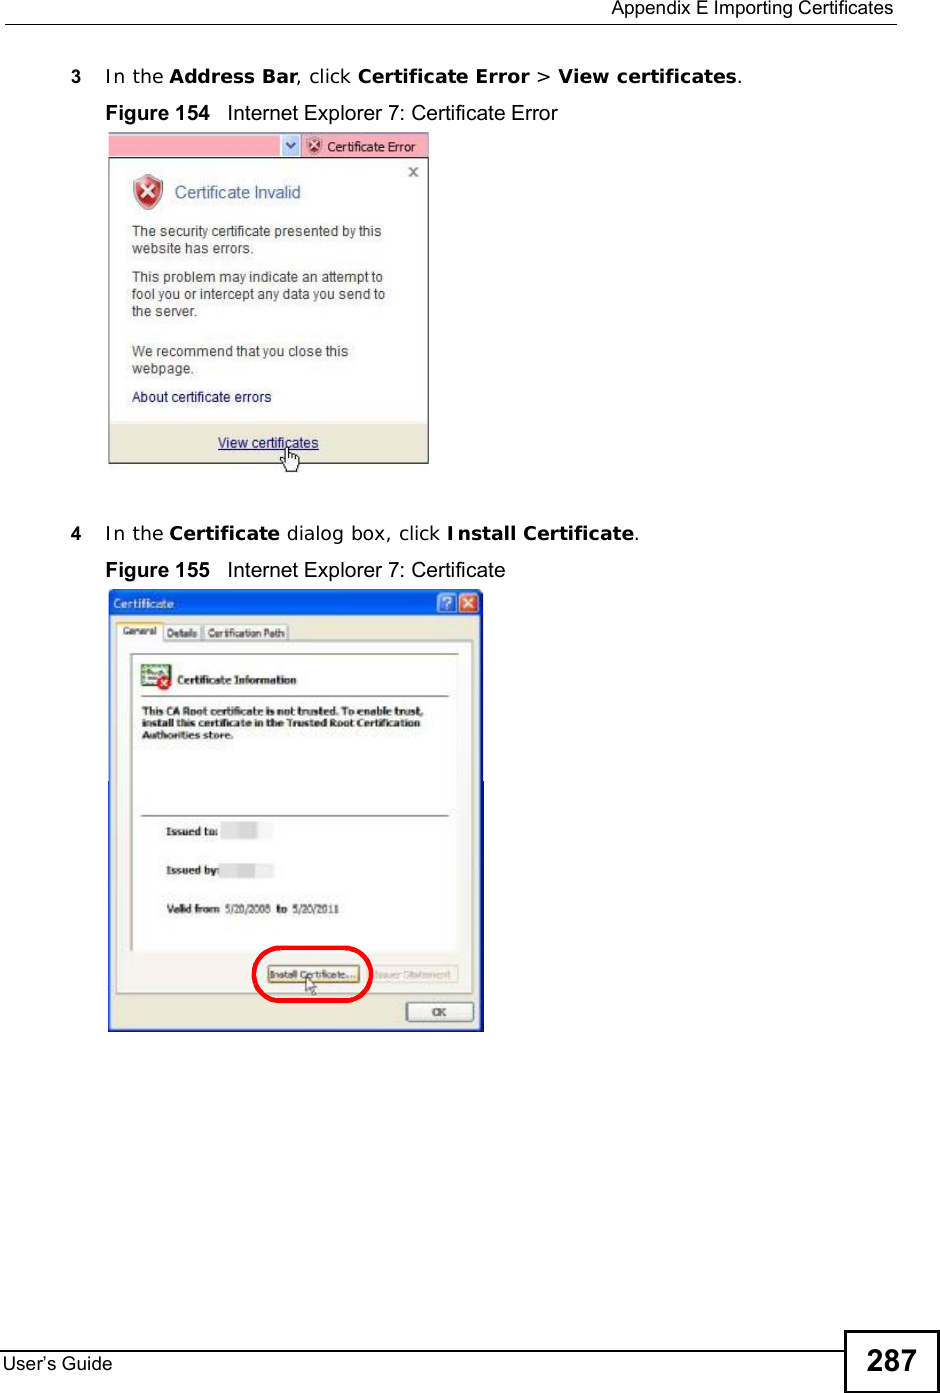  Appendix EImporting CertificatesUser s Guide 2873In the Address Bar, click Certificate Error &gt; View certificates.Figure 154   Internet Explorer 7: Certificate Error4In the Certificate dialog box, click Install Certificate.Figure 155   Internet Explorer 7: Certificate